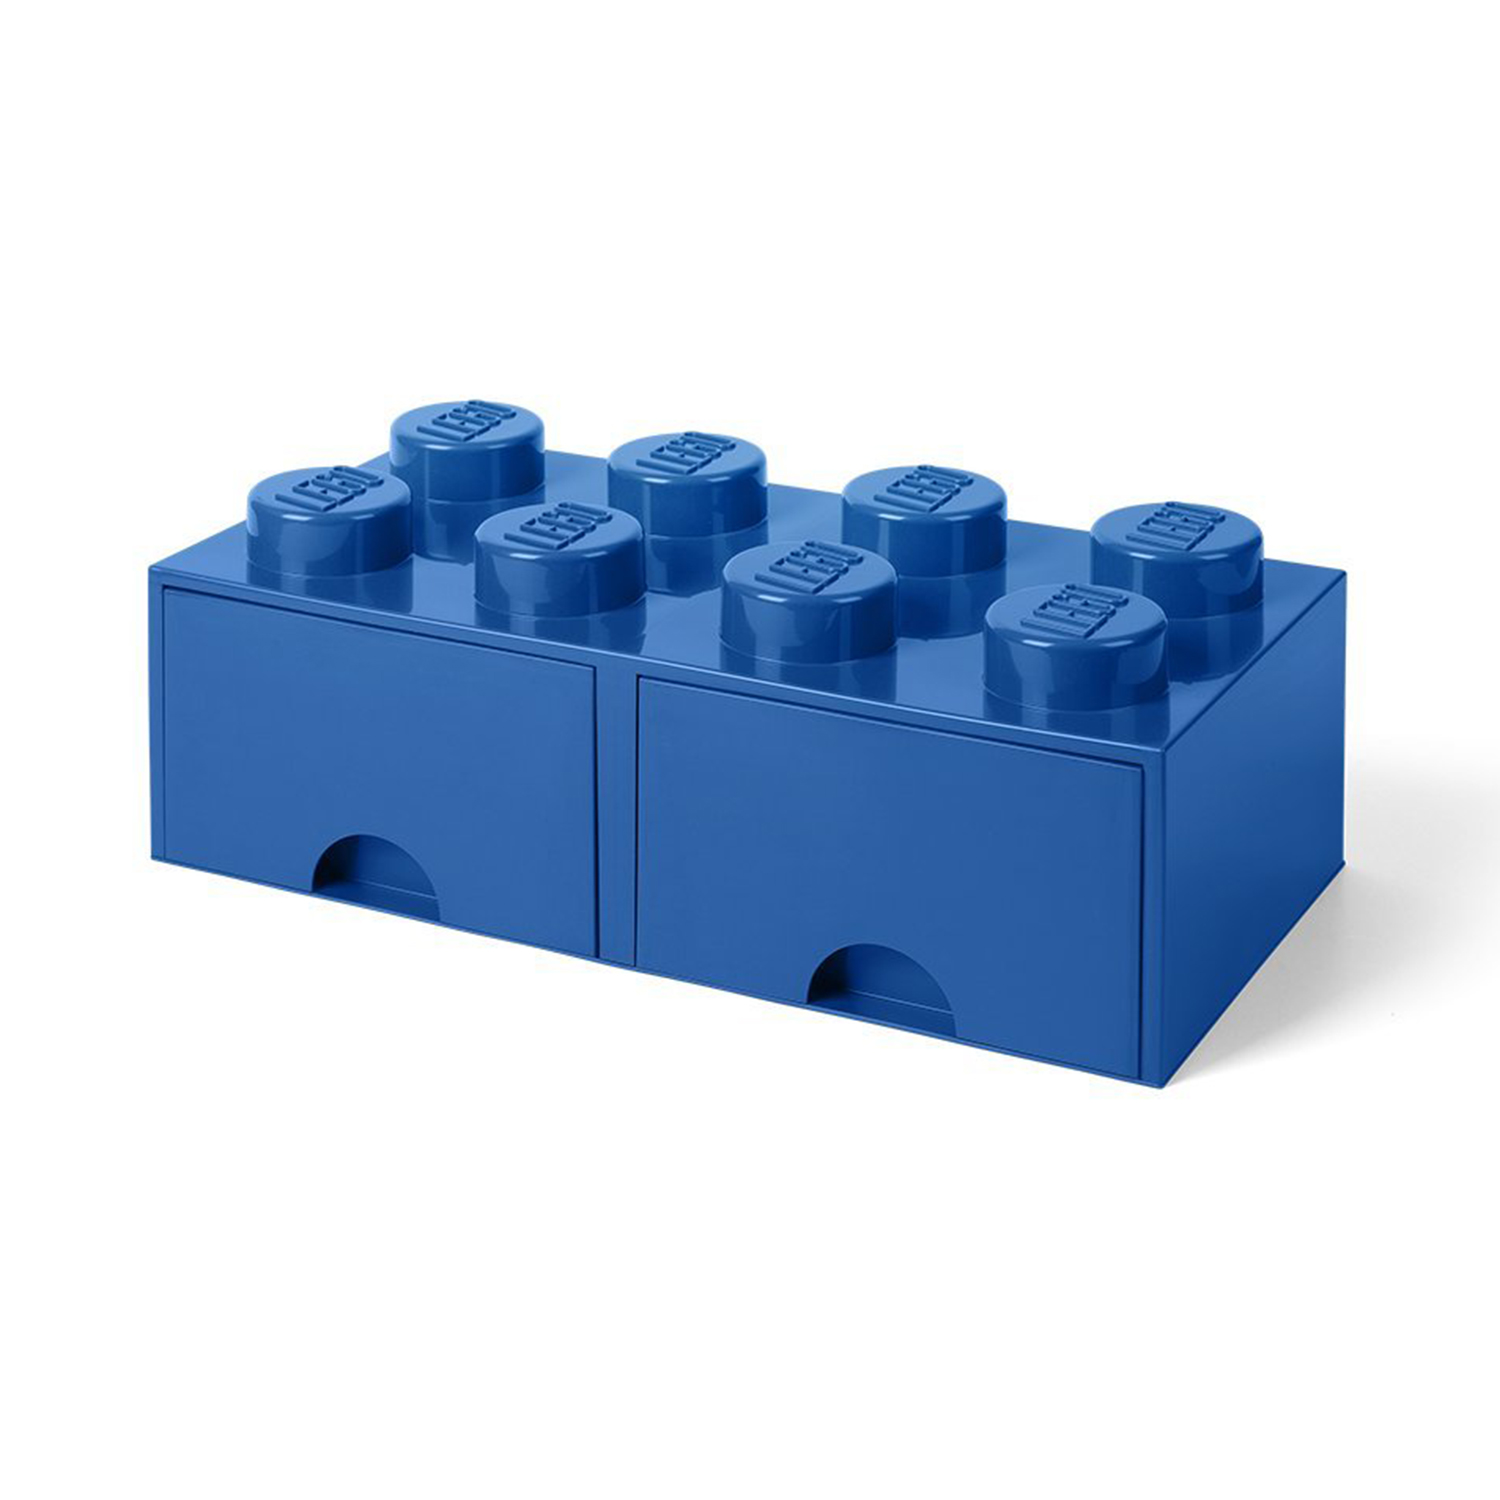 Best for Stackable Lego Storage: Room Copenhagen Lego 8-Brick Storage Drawer (Set of 2)